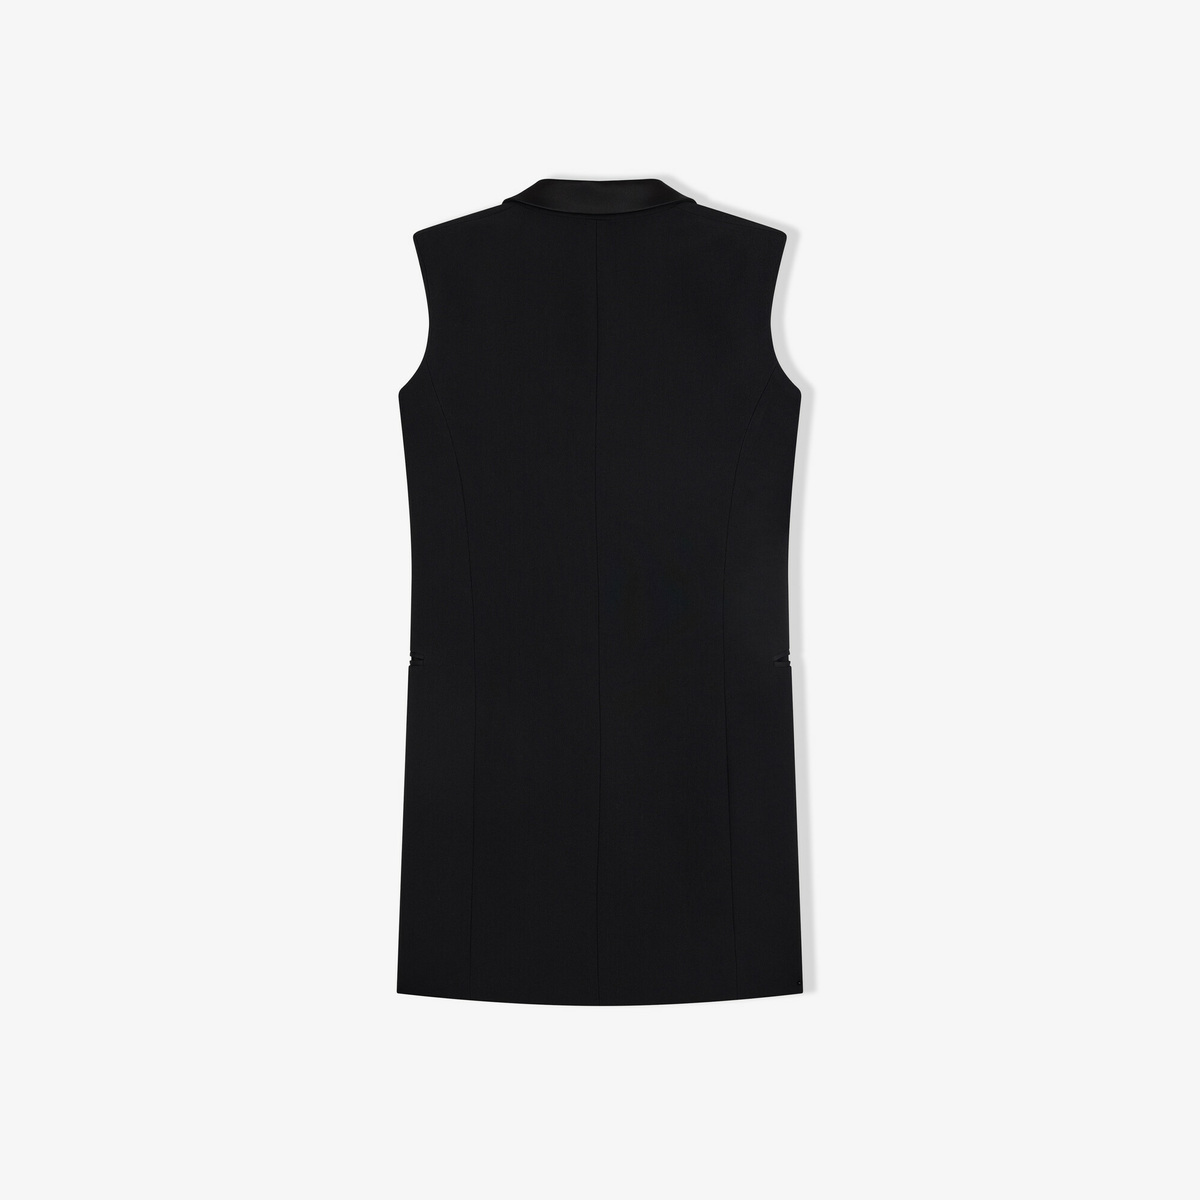 Victoire Blazer Dress, Black - image 4